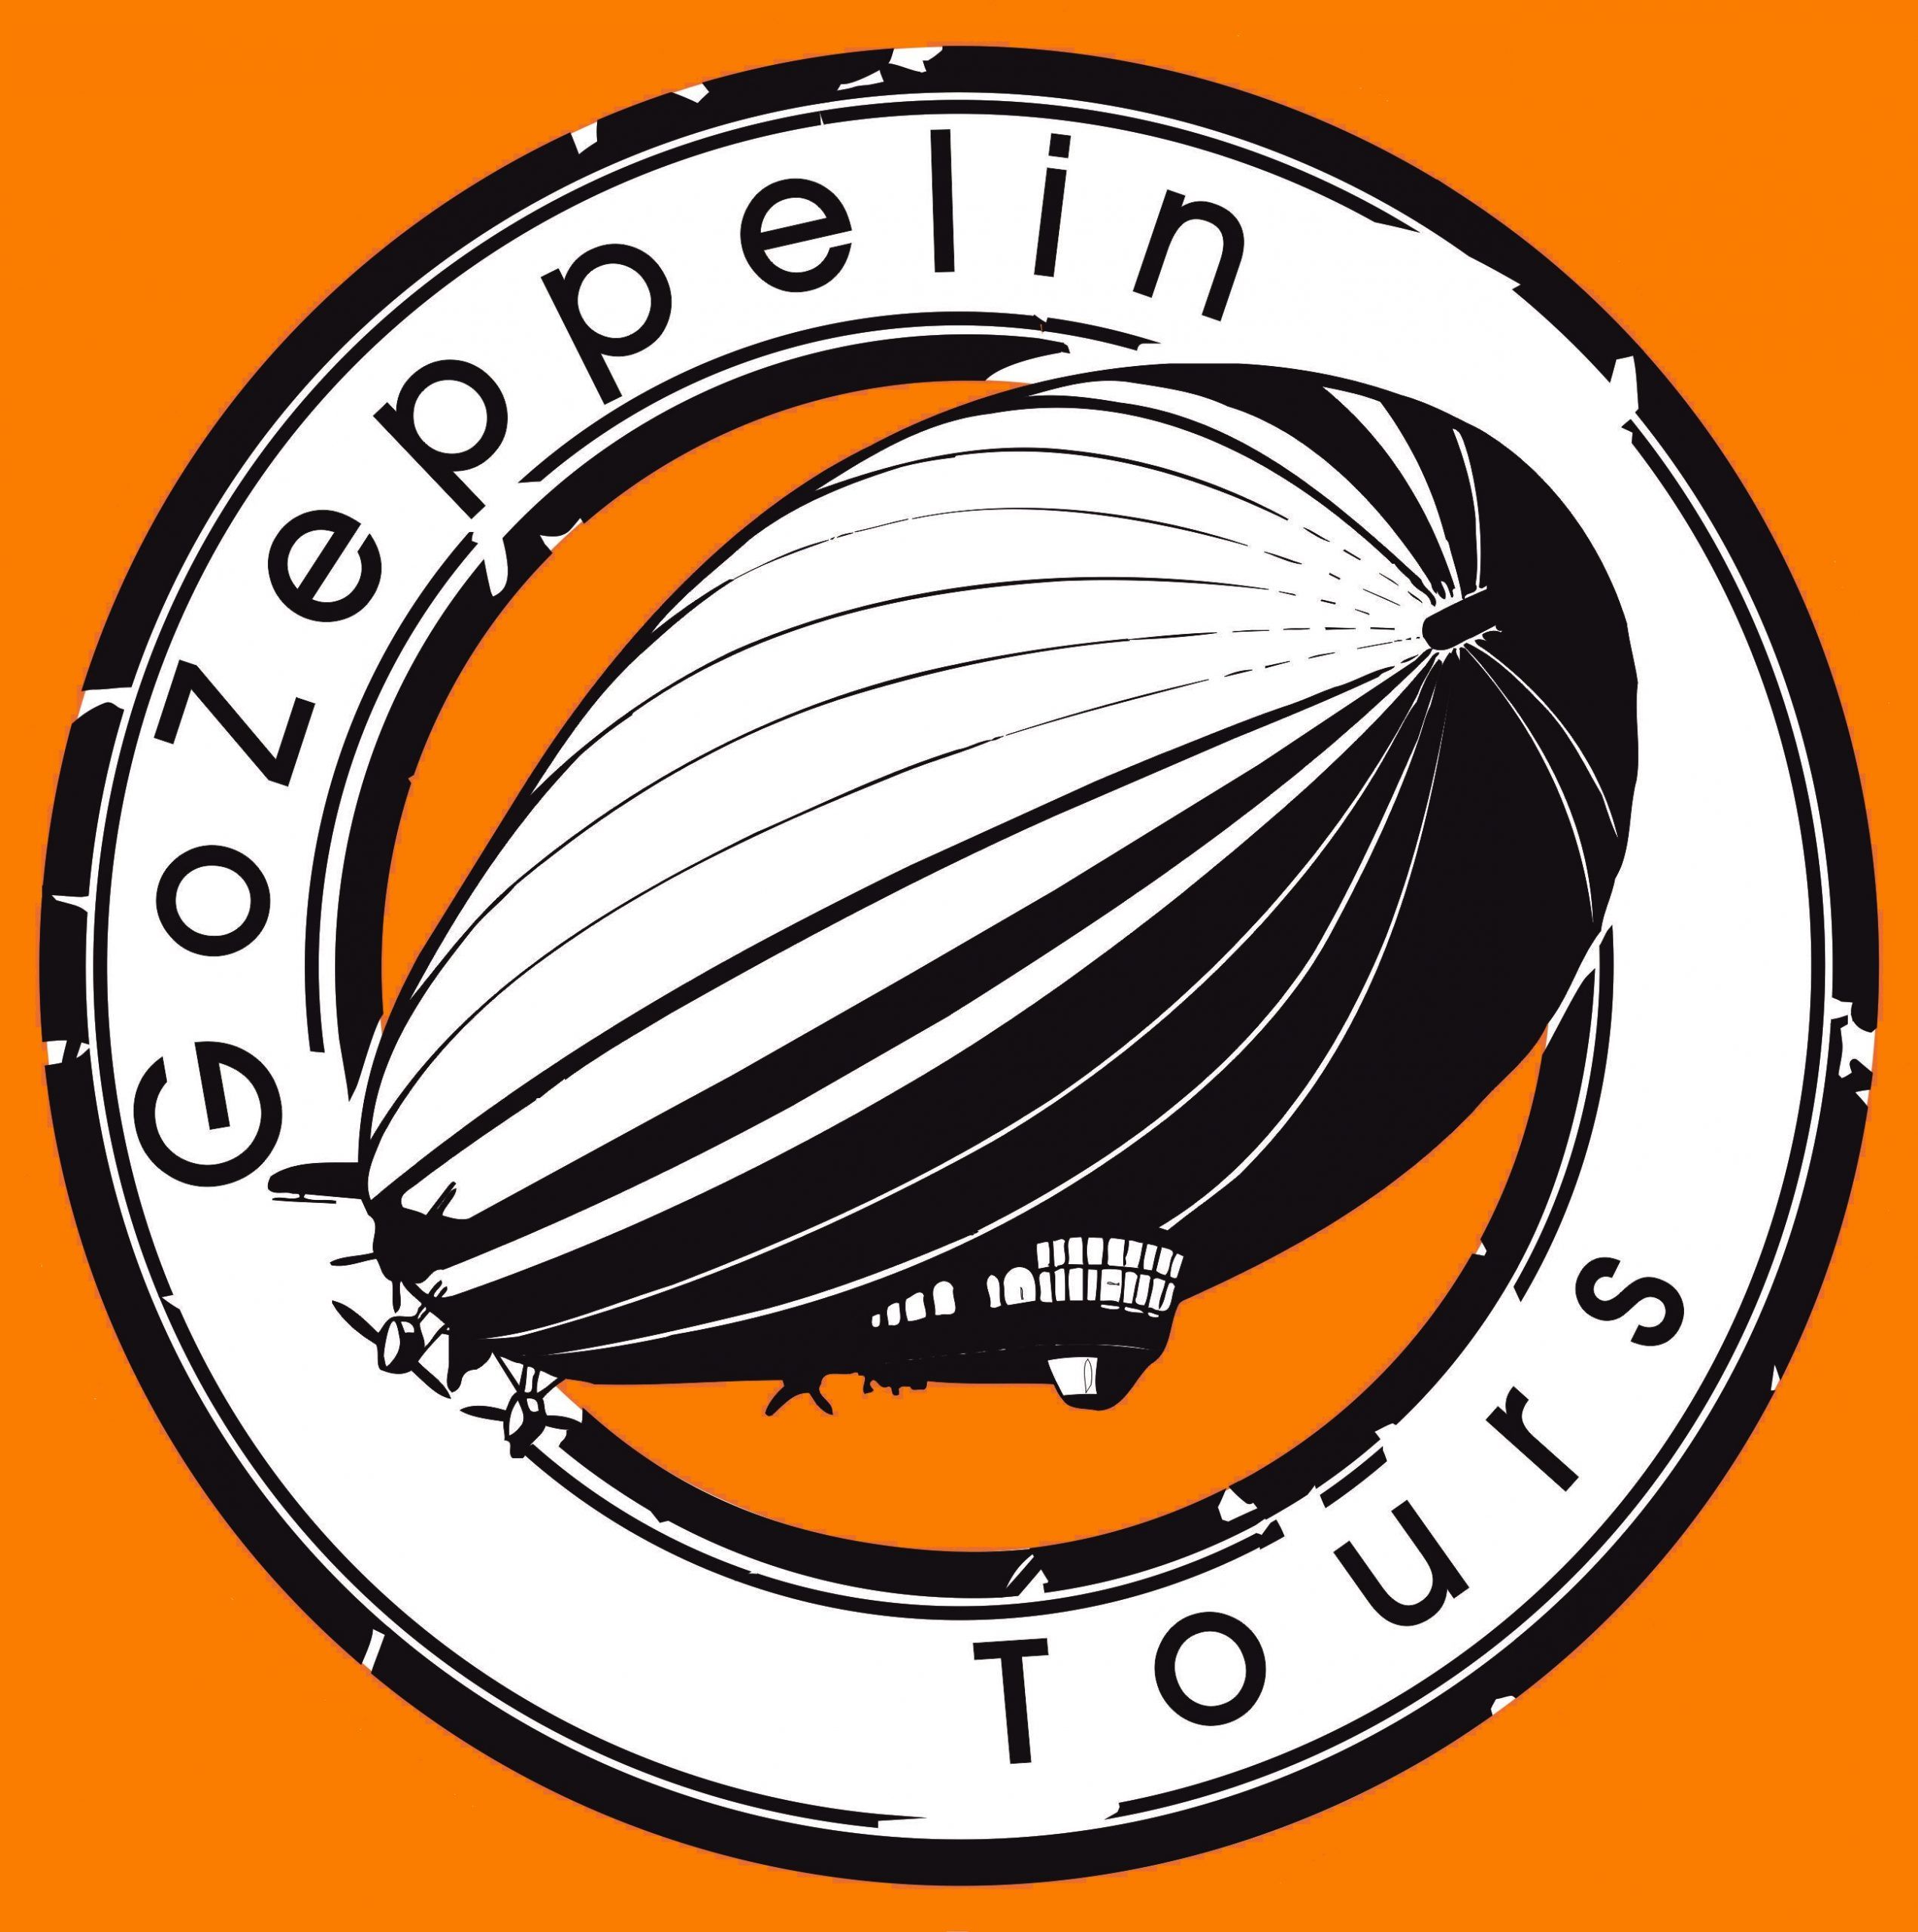 Go Zeppelin Free Tours